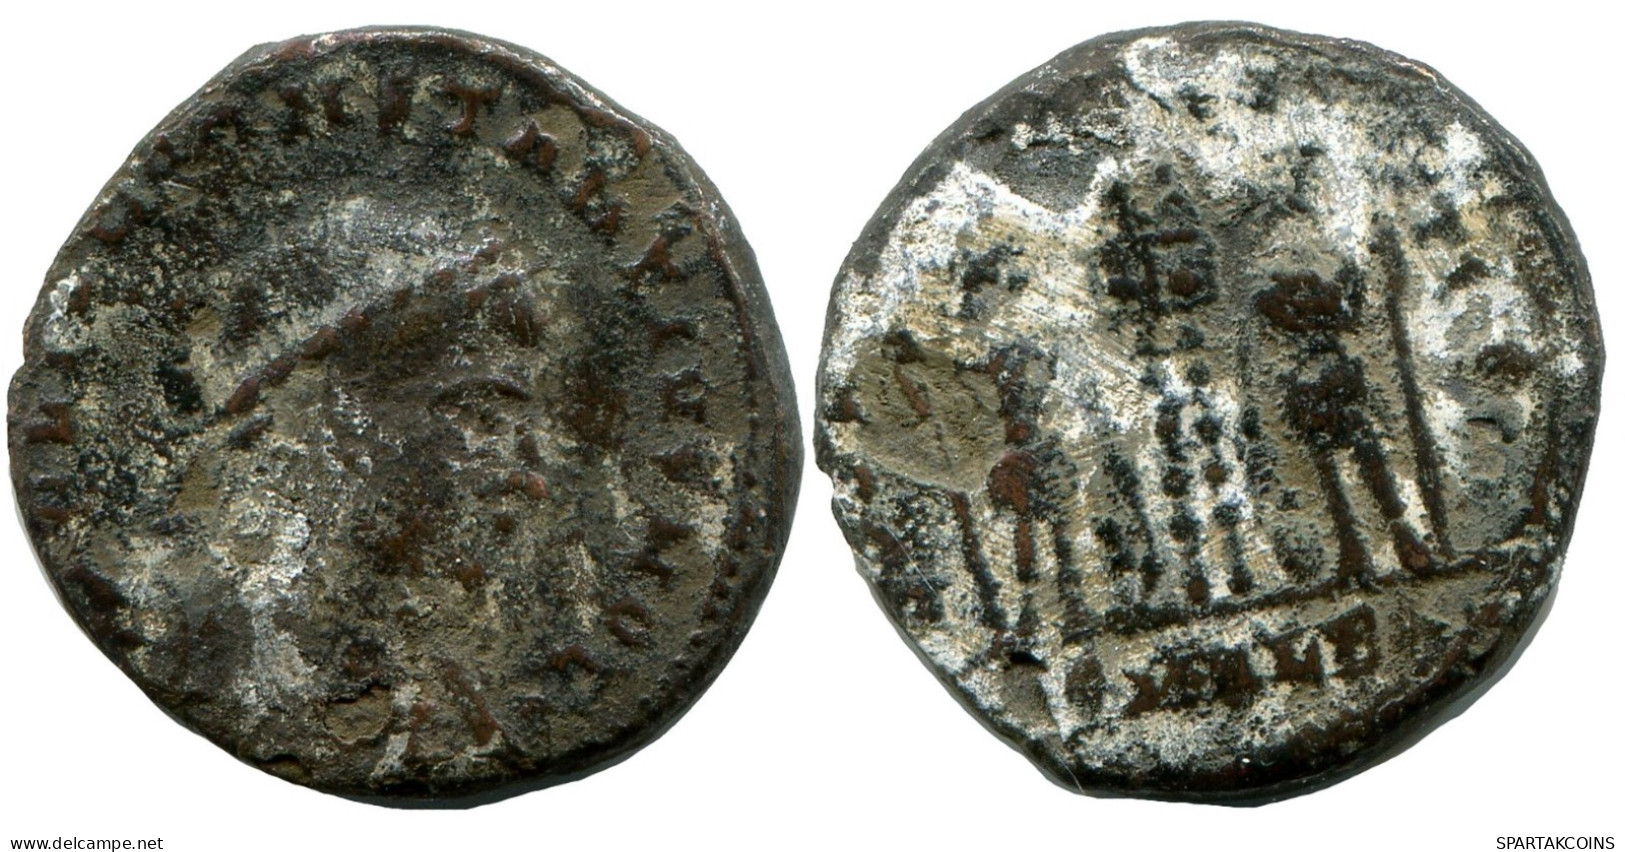 CONSTANTIUS II MINTED IN ALEKSANDRIA FOUND IN IHNASYAH HOARD #ANC10446.14.U.A - El Imperio Christiano (307 / 363)